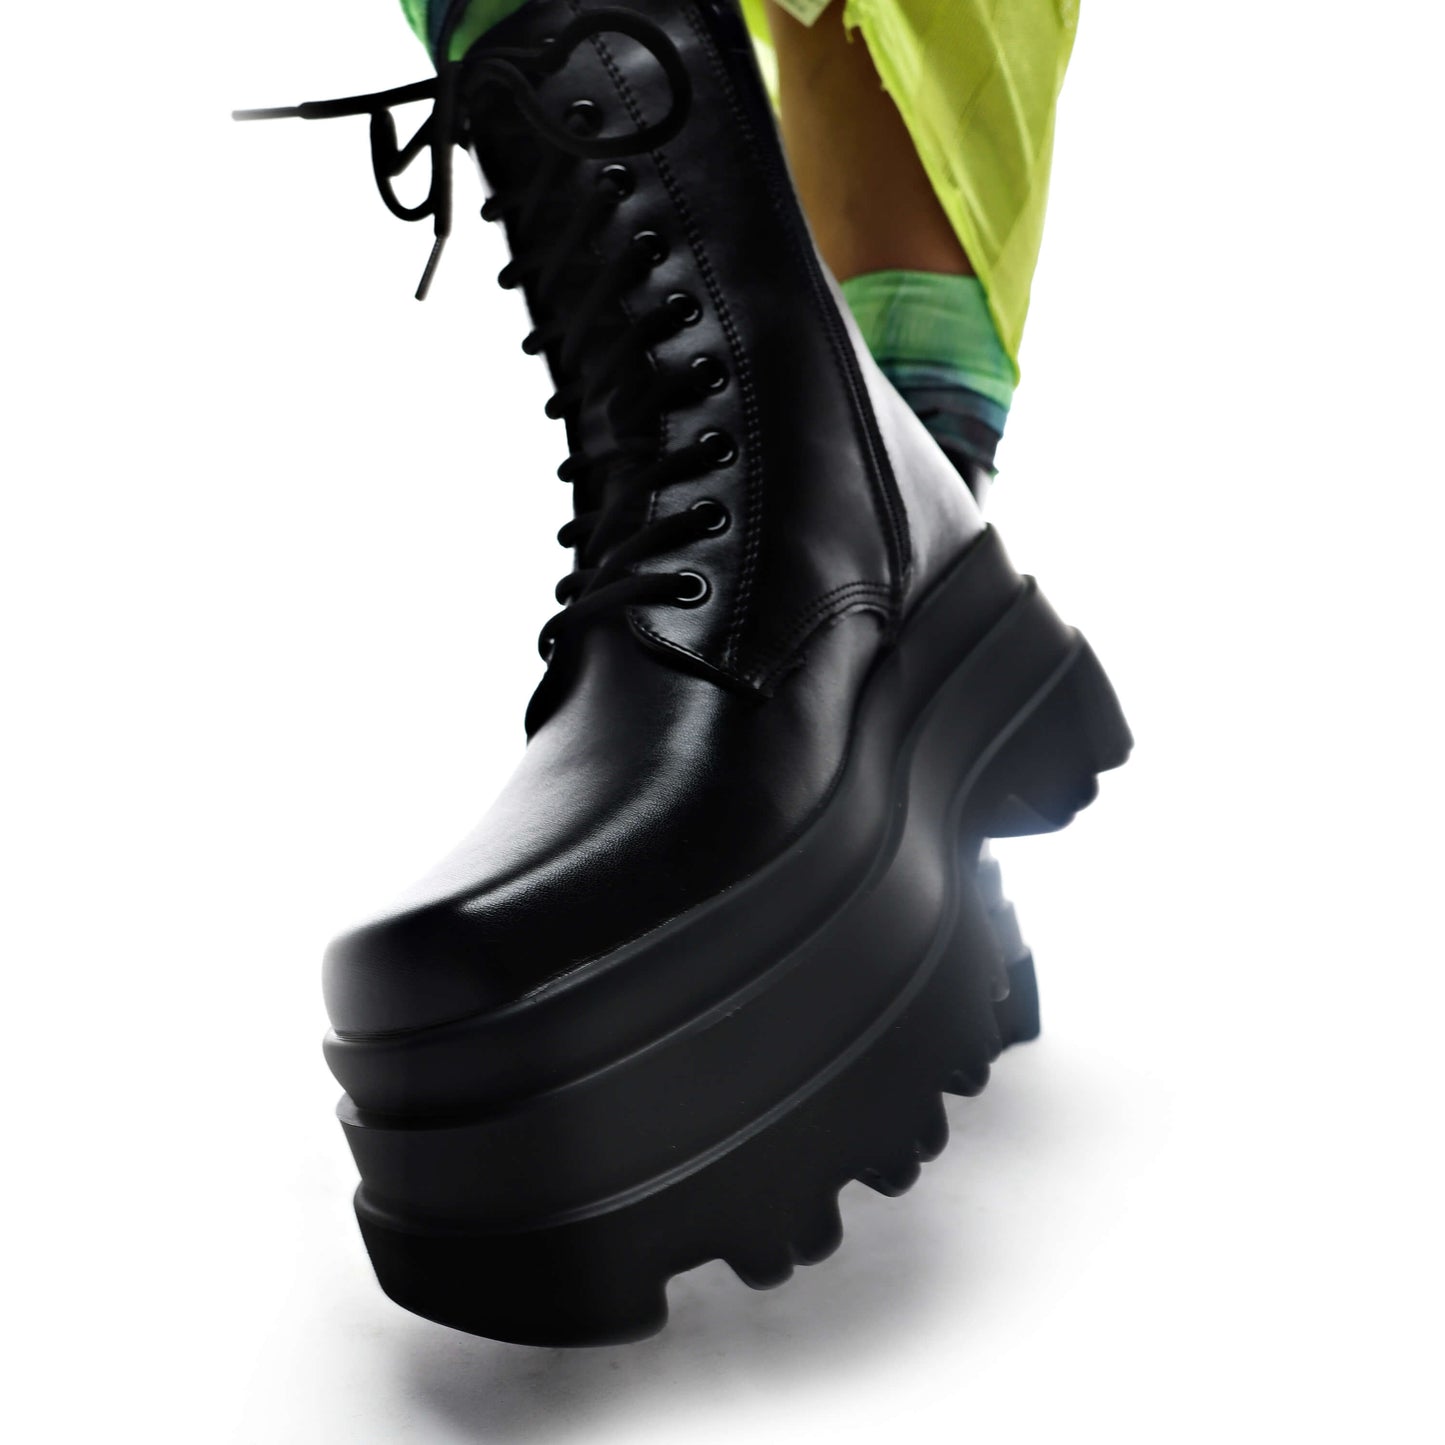 Deathwatch Trident Platform Boots - Ankle Boots - KOI Footwear - Black - Front Model Detail